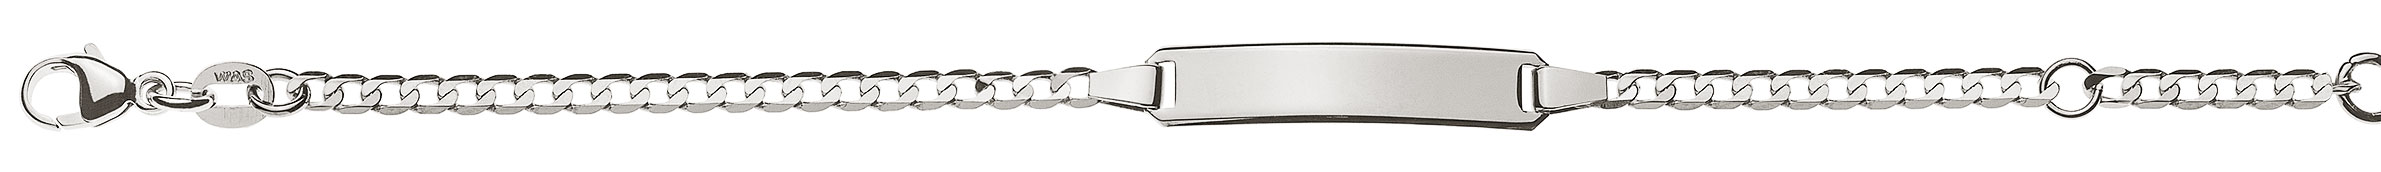 AURONOS Prestige ID bracelet 18k white gold curb chain diamond-plated 16cm